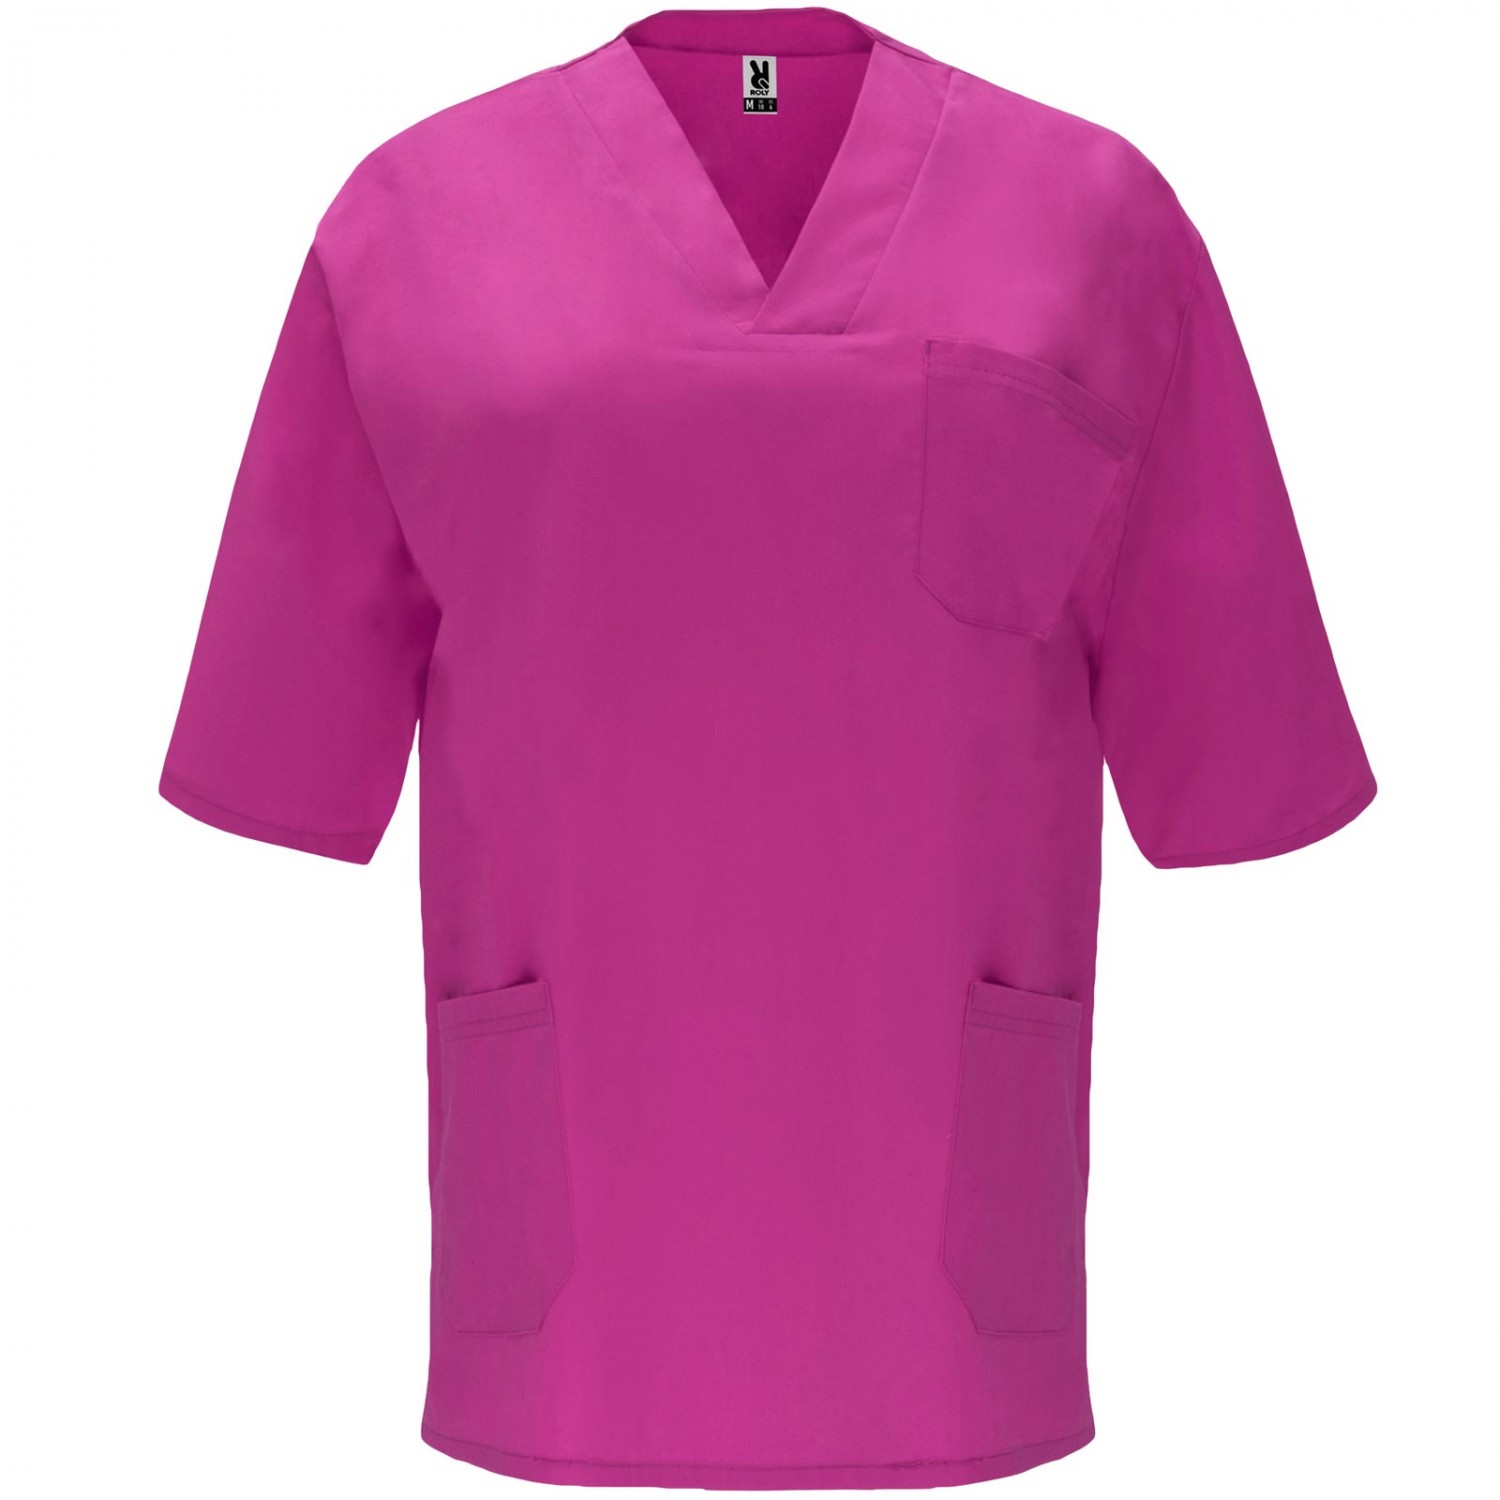 Schlupfkasack Medizin Pflege Unisex Hemd Jacke (Farbe: violett Größe: M)